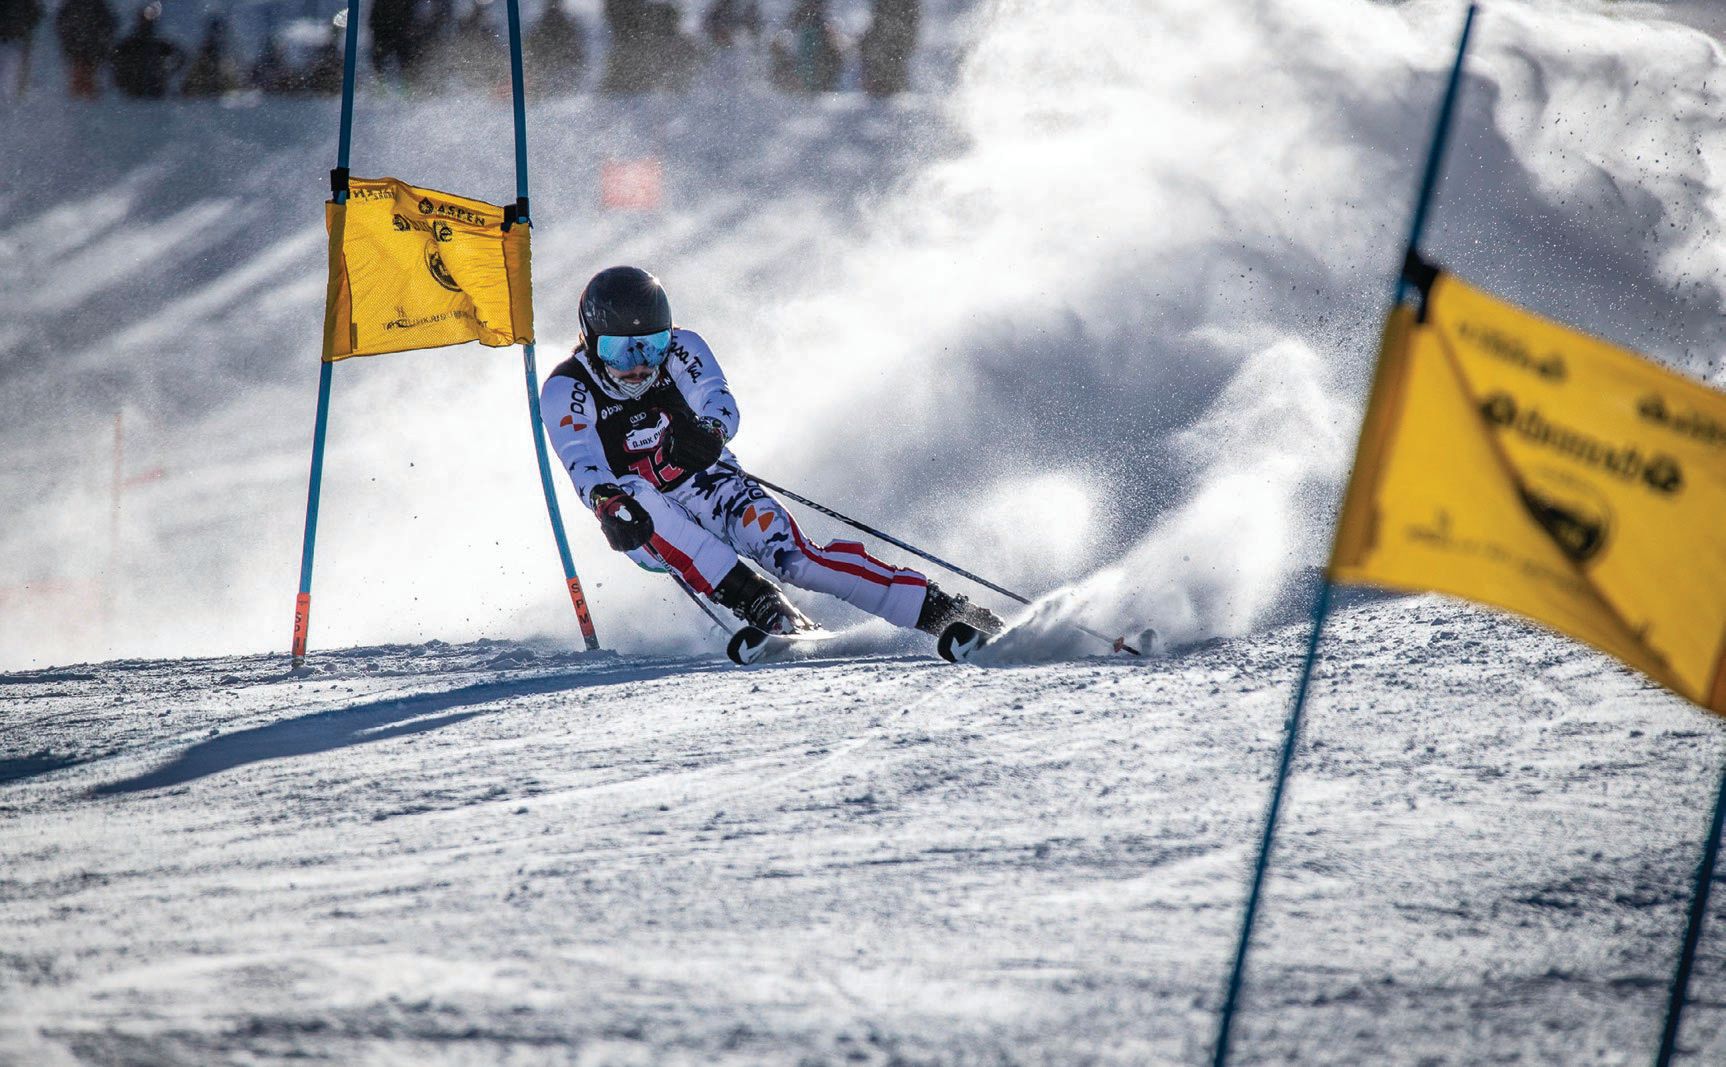 Ben Throm racing on the Casa Tua team PHOTO BY MATT POWER/COURTESY OF ASPEN VALLEY SKI SNOWBOARD CLUB